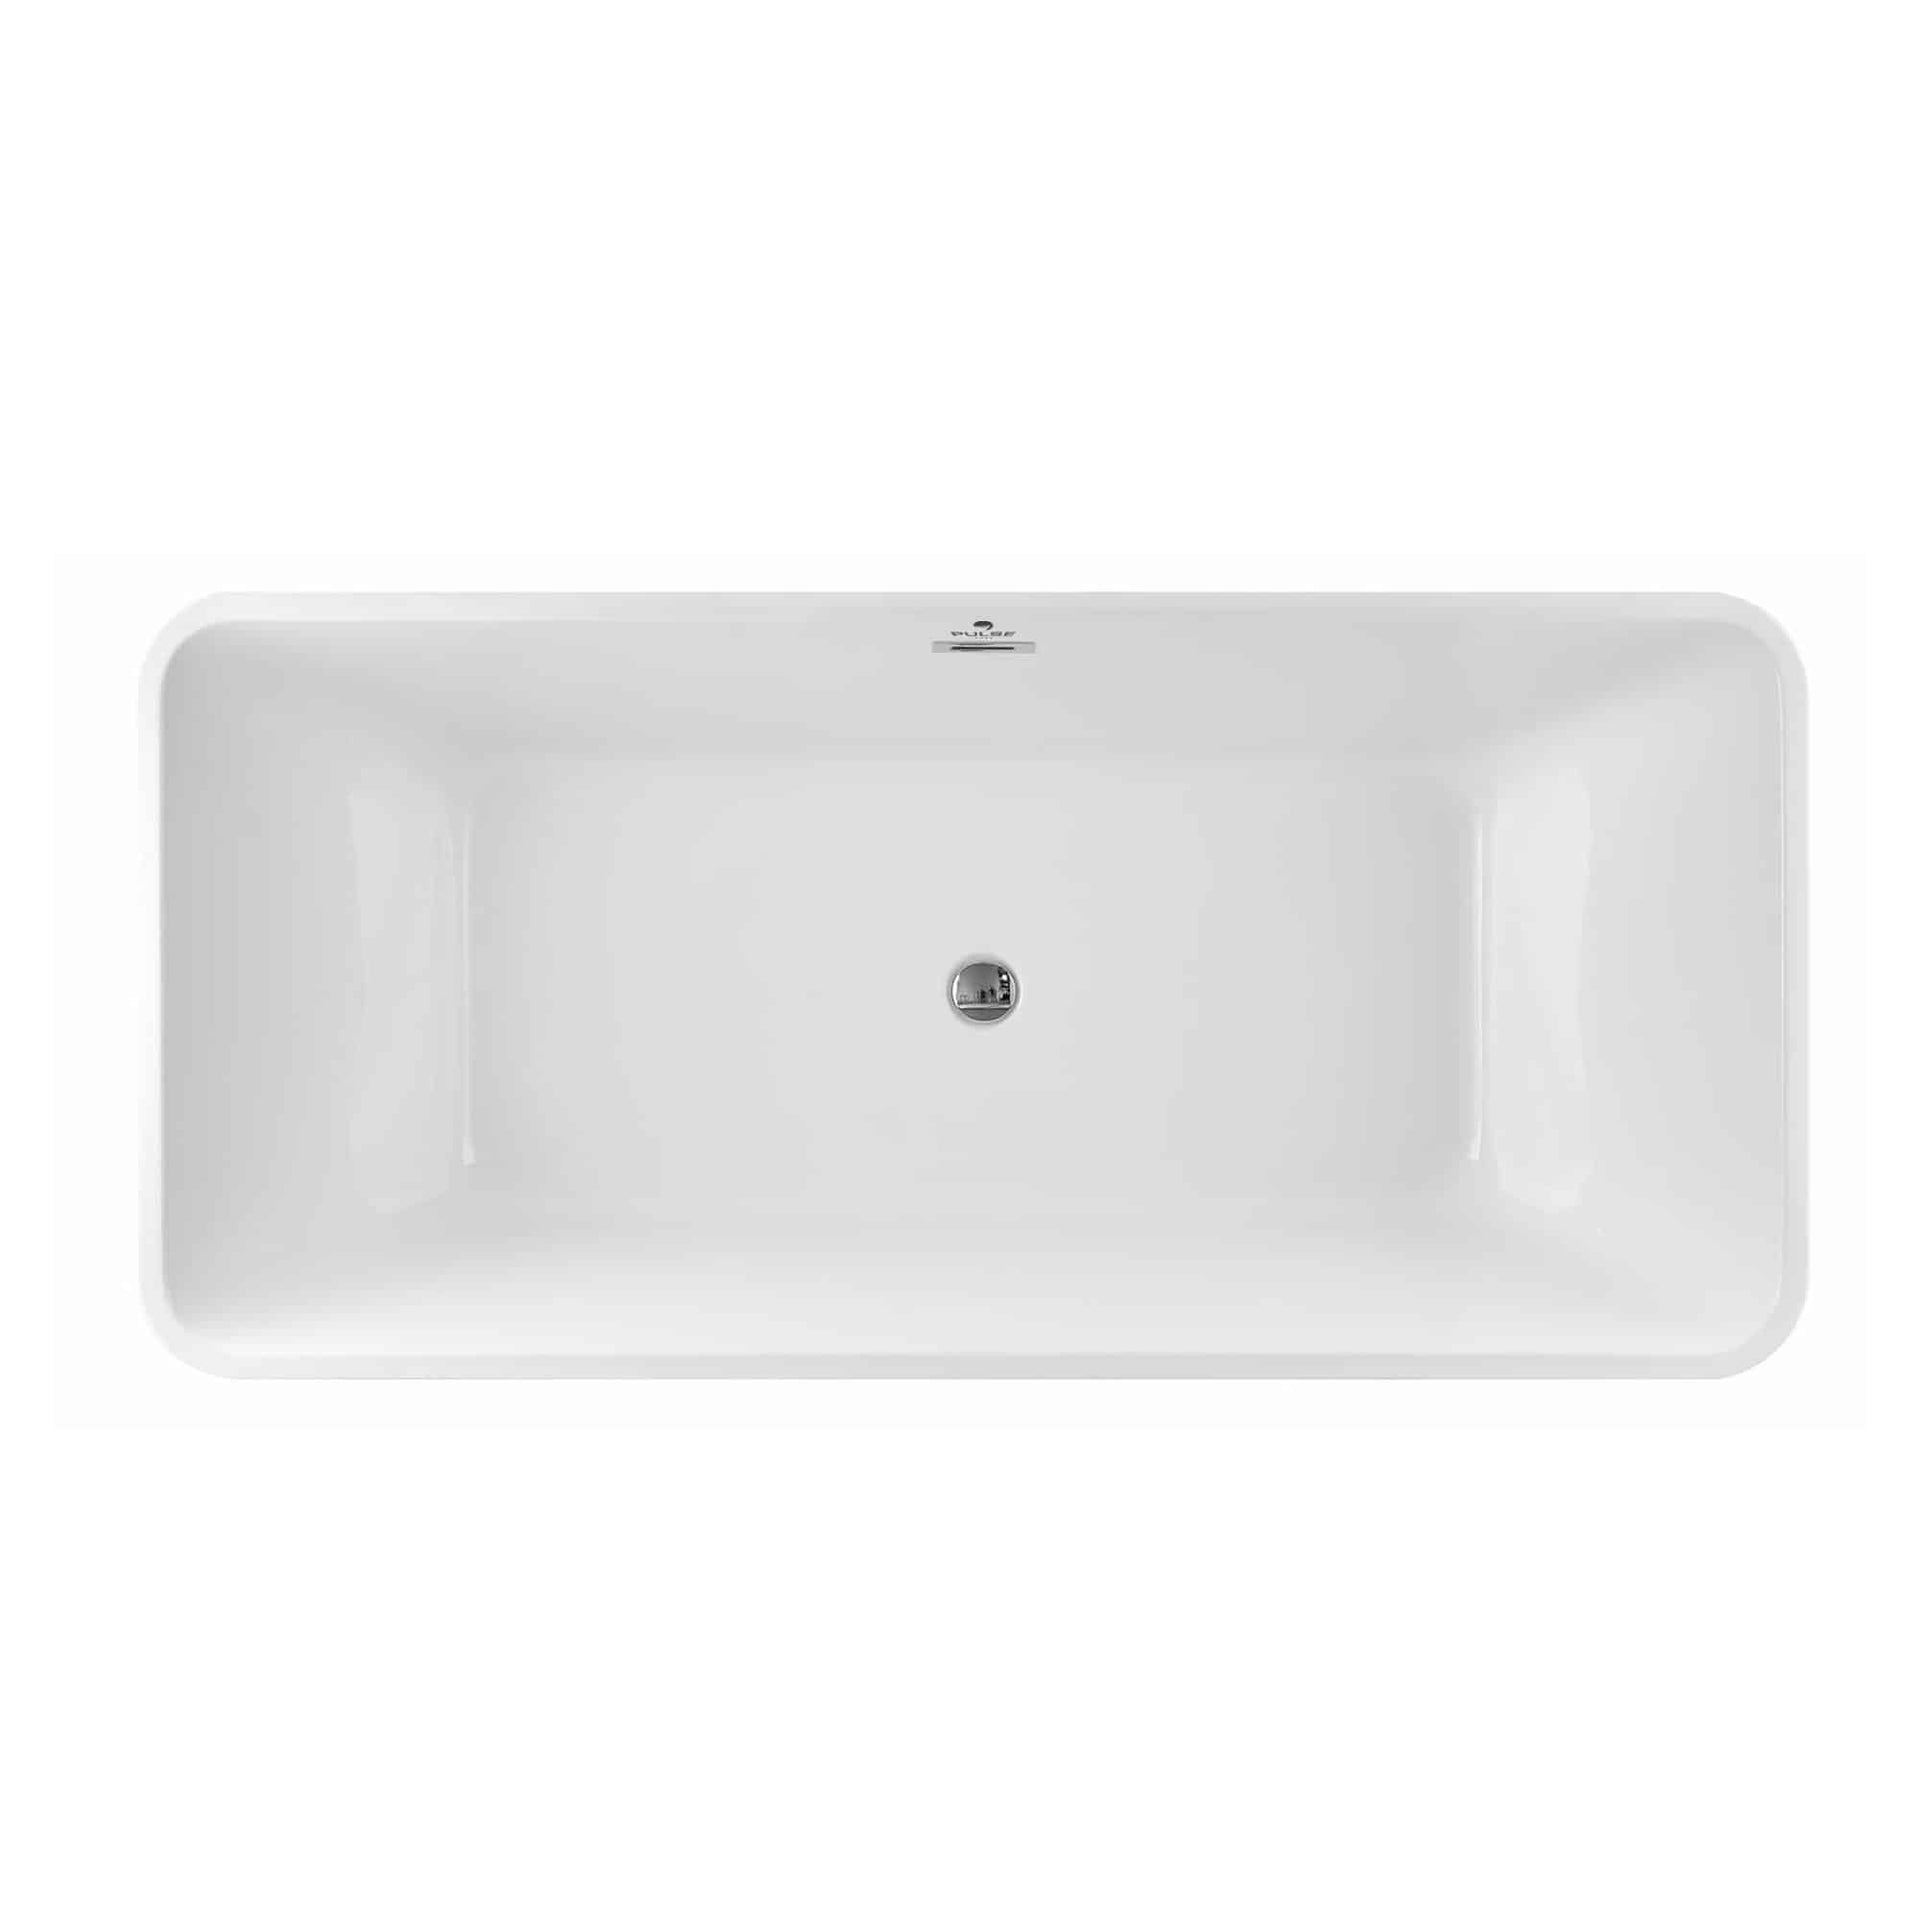 Pulse ShowerSpas 67" Acrylic Freestanding Soaking Bathtub Tilt Design - Glossy White - Senior.com Stand alone Tubs